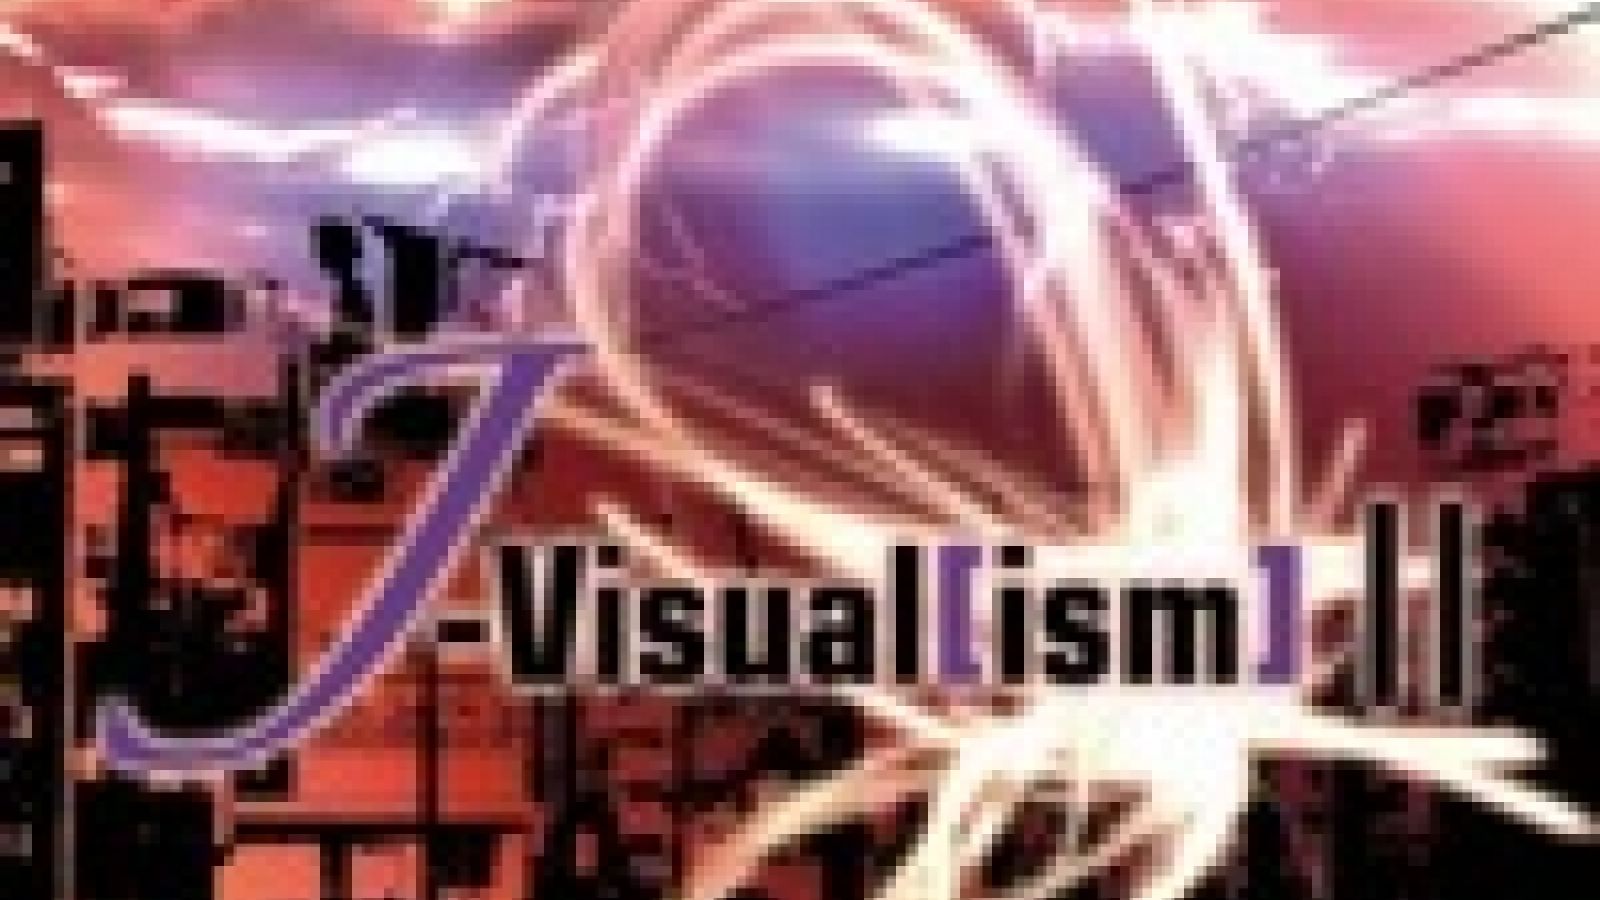 J-Visual[ism] 2 © DEATHGAZE